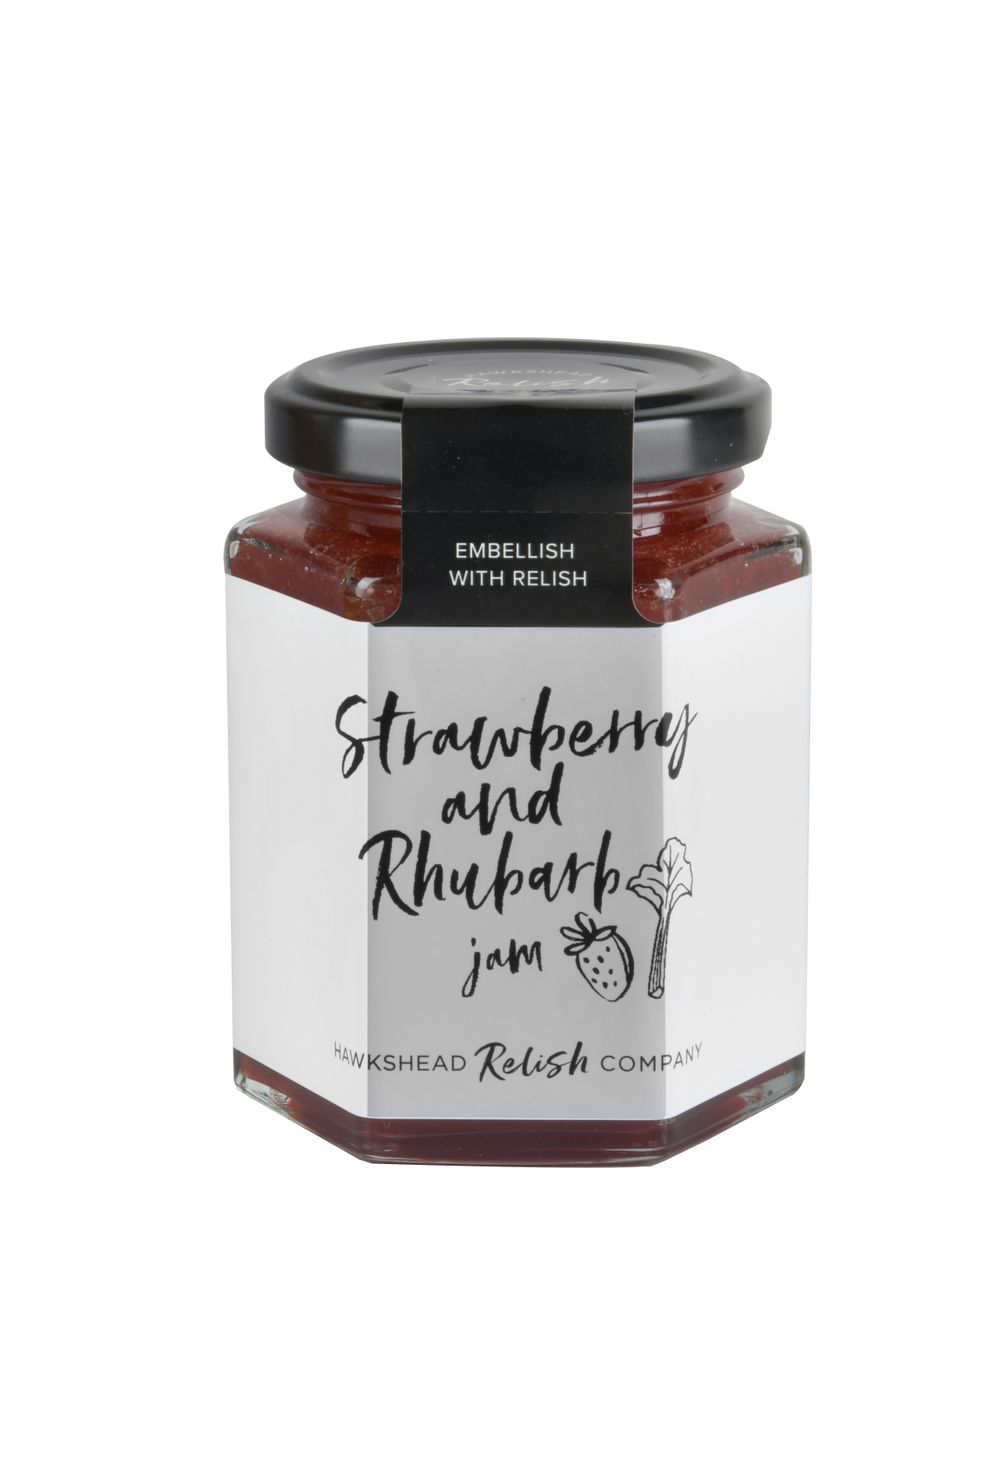 Strawberry & Rhubarb Jam